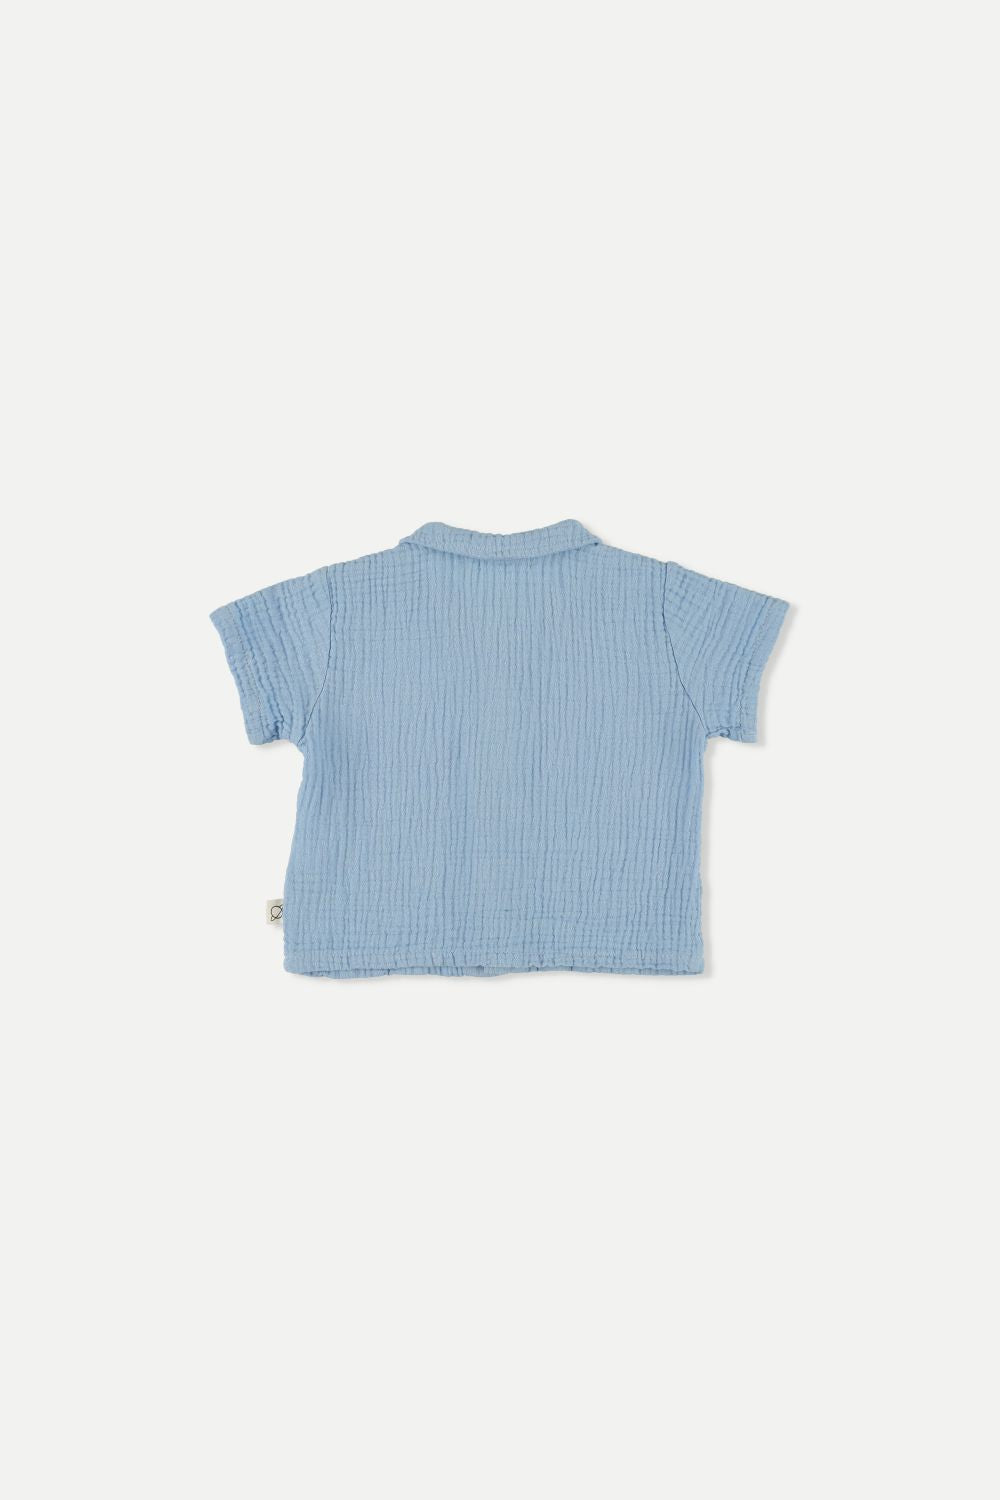 My Little Cozmo -  Baby Hemd kurzarm Musselin blau